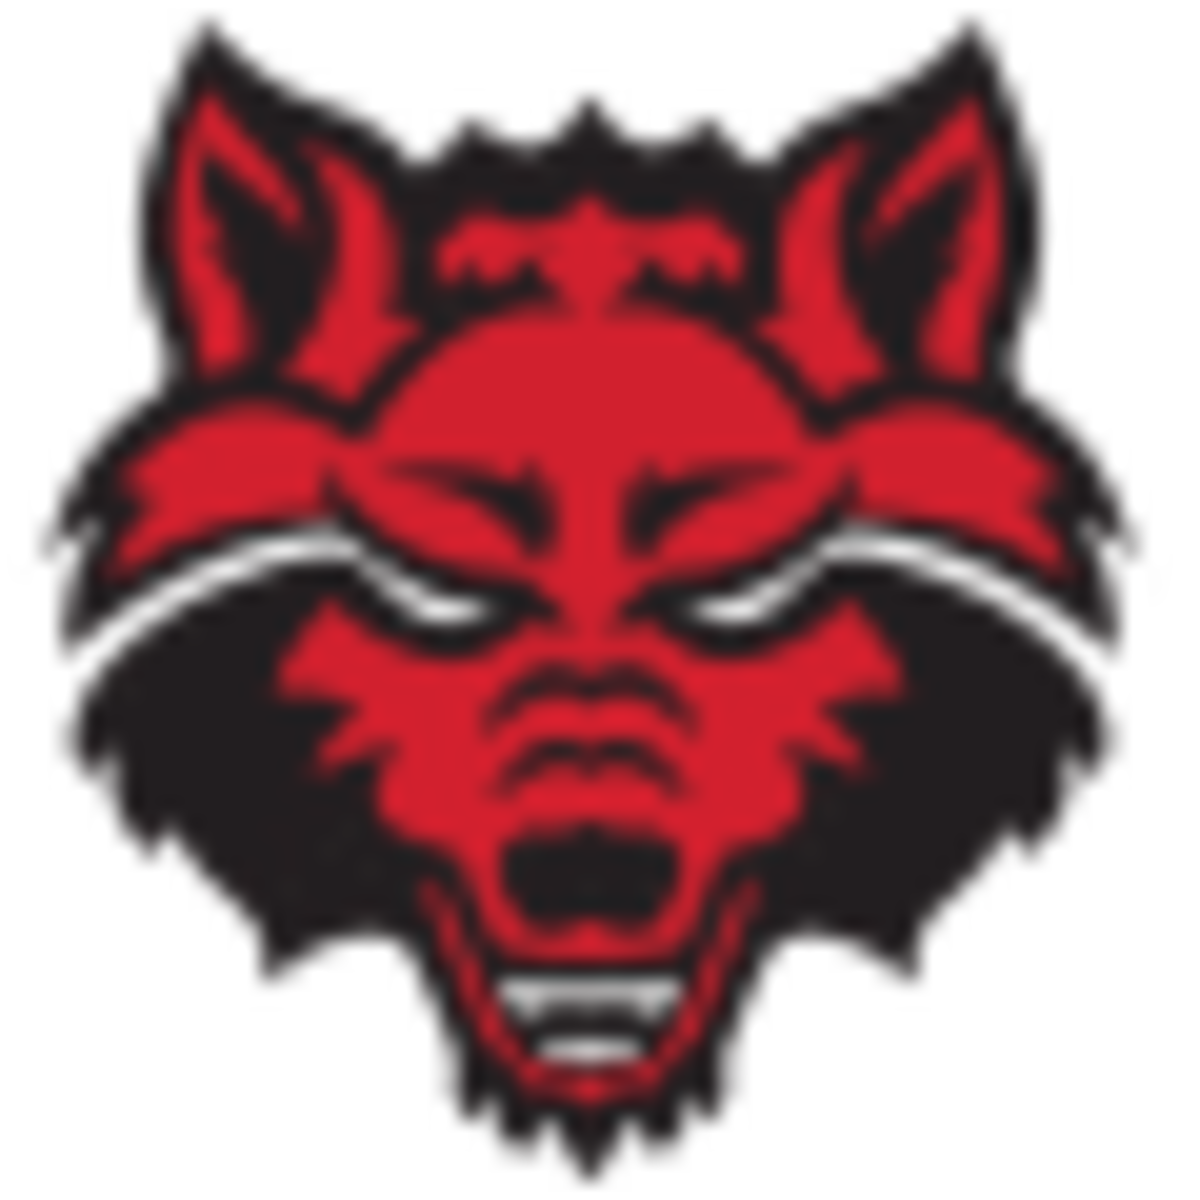 Arkansas State logo